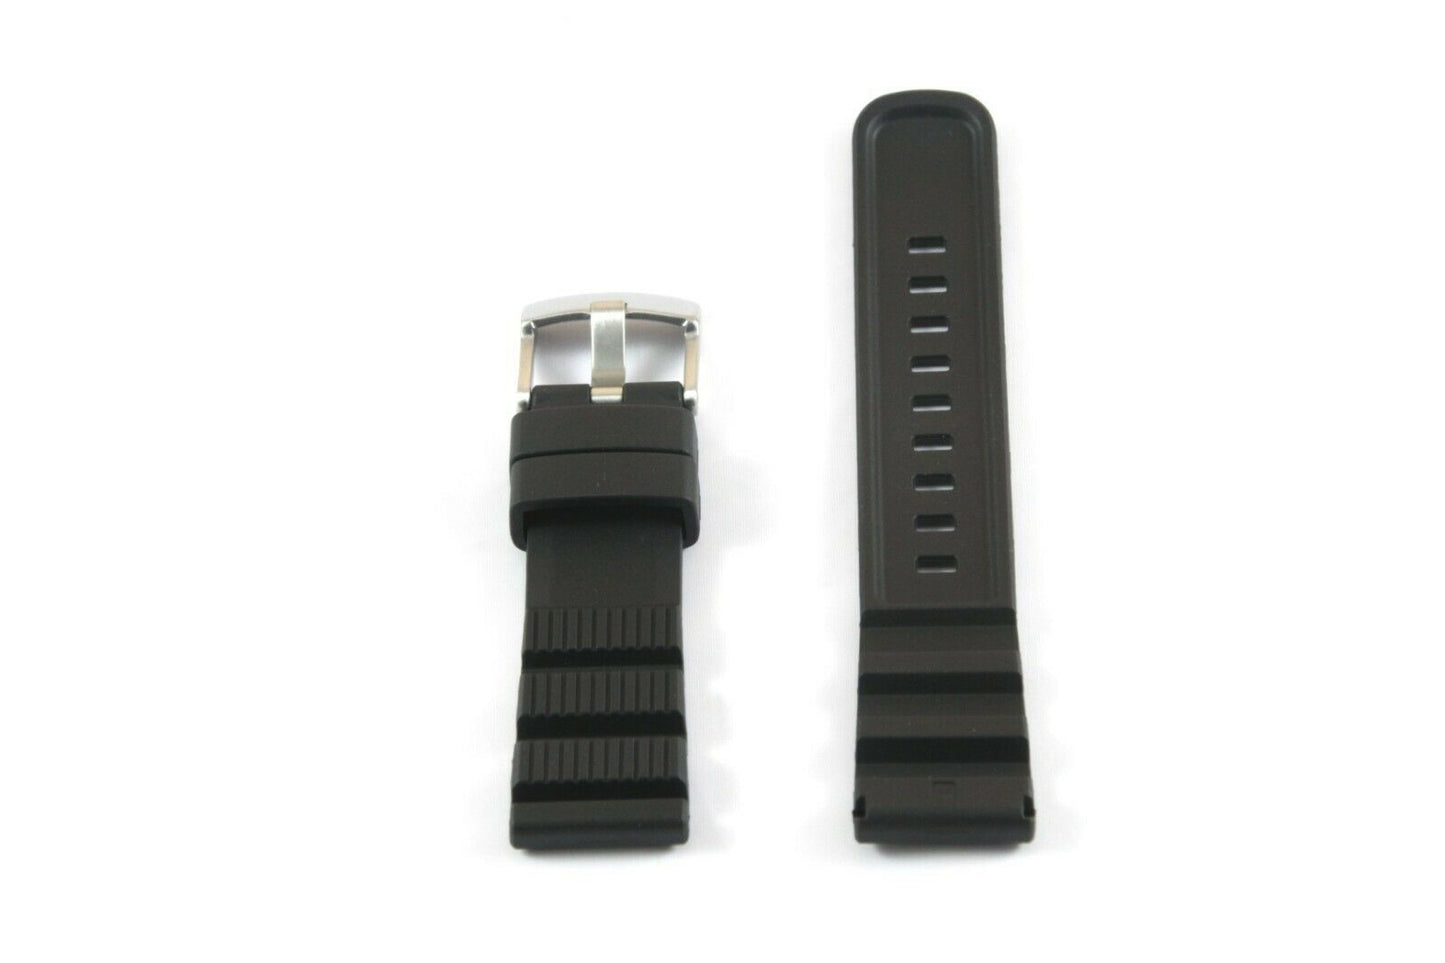 Timex Ersatzarmband T2N810 Depht Gauge IQ-Serie - T2N958 T2N809 T2N812 T2P529